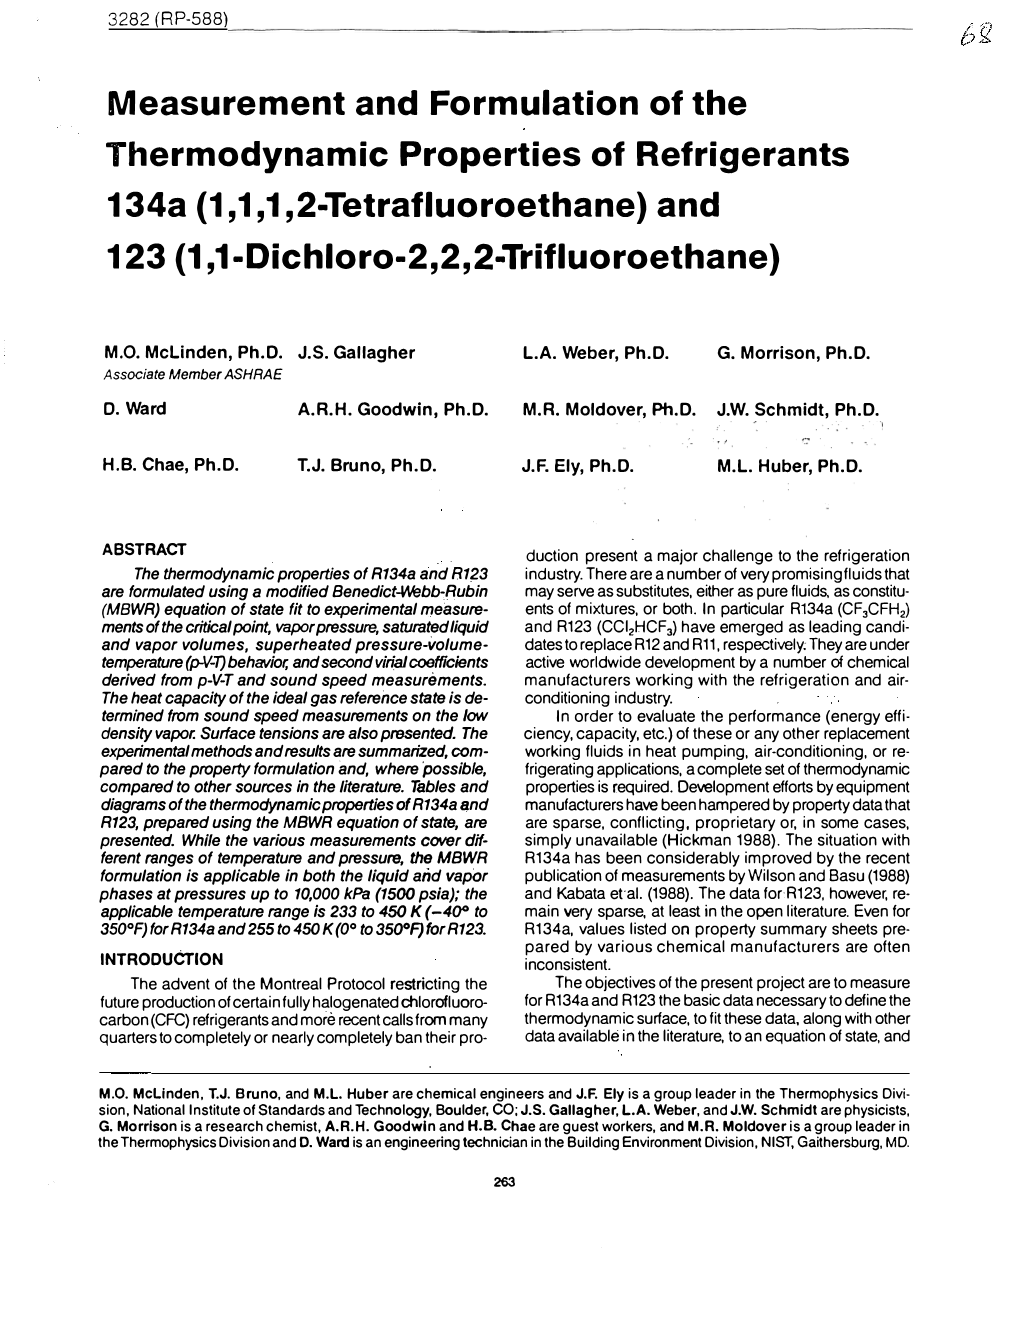 Measurement and Formulation of the Thermodynamic Properties of Refrigerants 134A (1,1,1,2-Tetrafluoroethane) and 123 (1,1-Dichloro-2, 2, 2-Trifluoroethane)